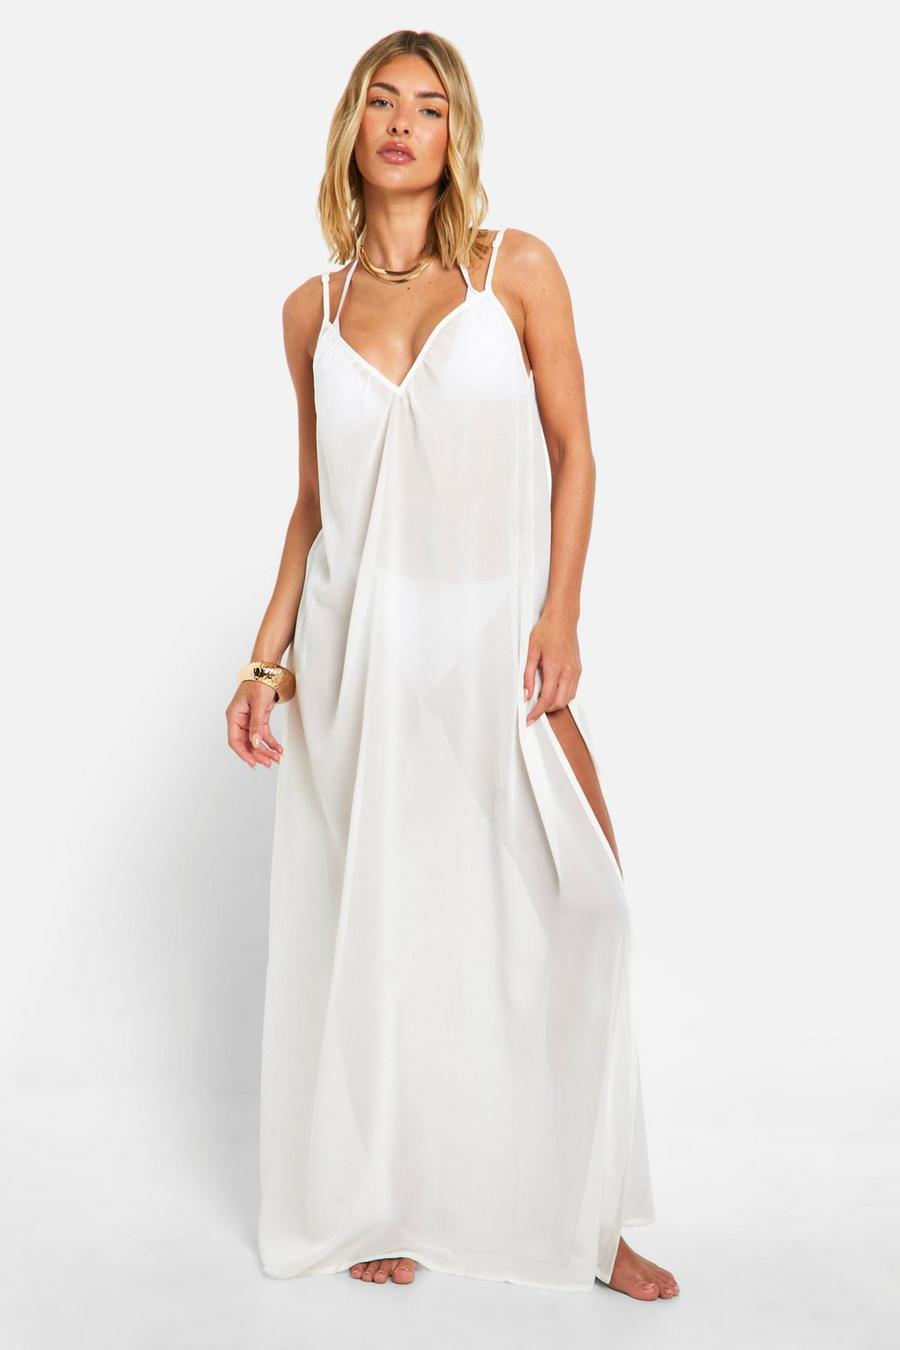 White Chiffon Strappy Beach Maxi Dress